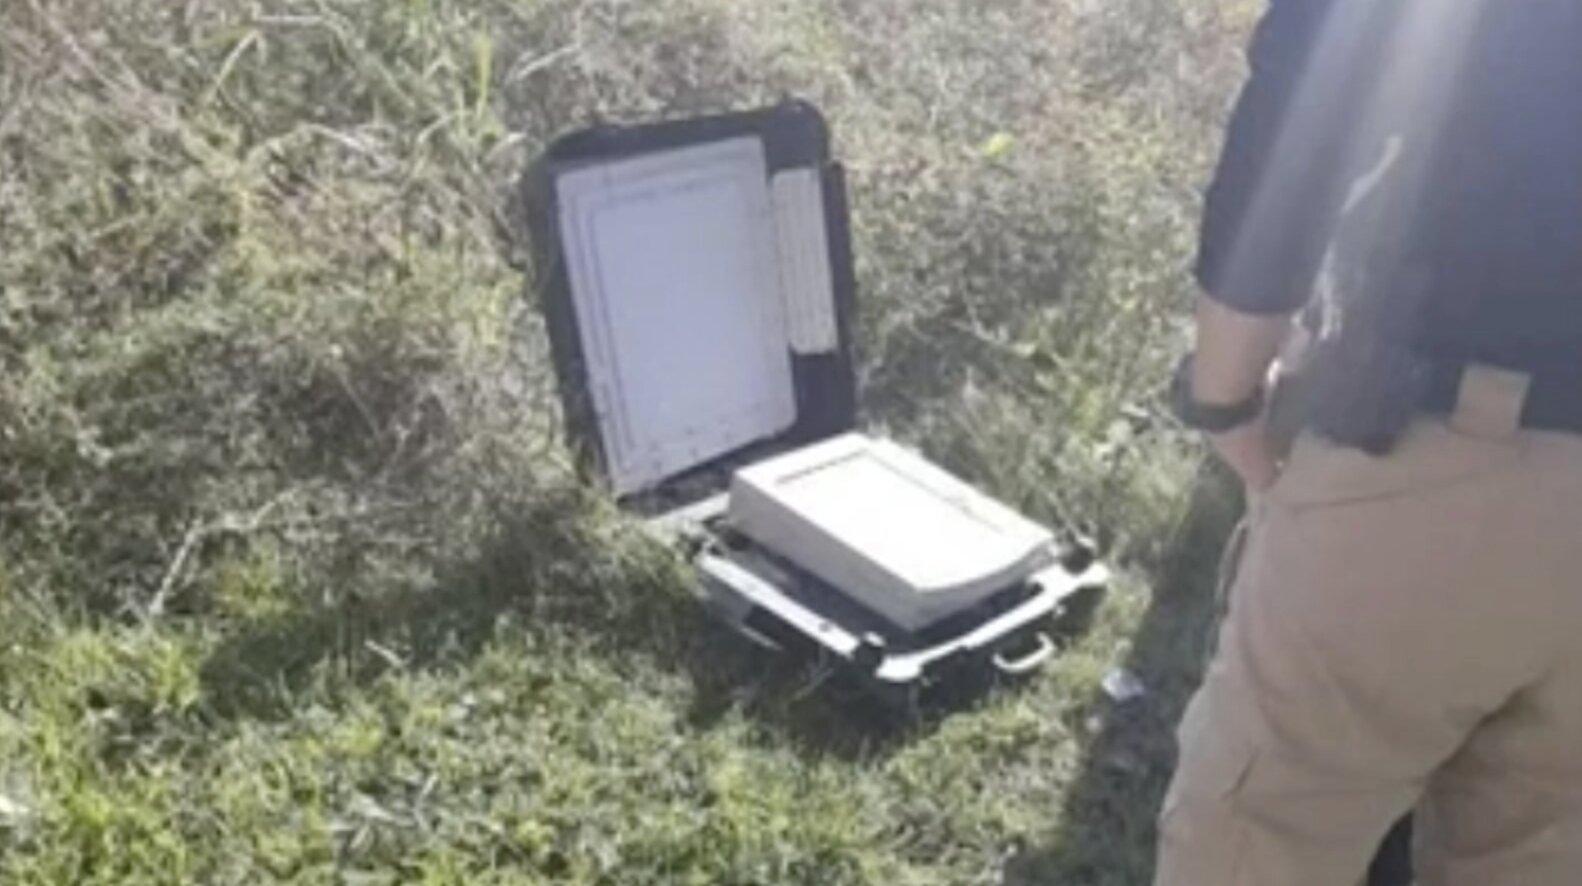 Voting Equipment Found Dumped On Roadside In Georgia